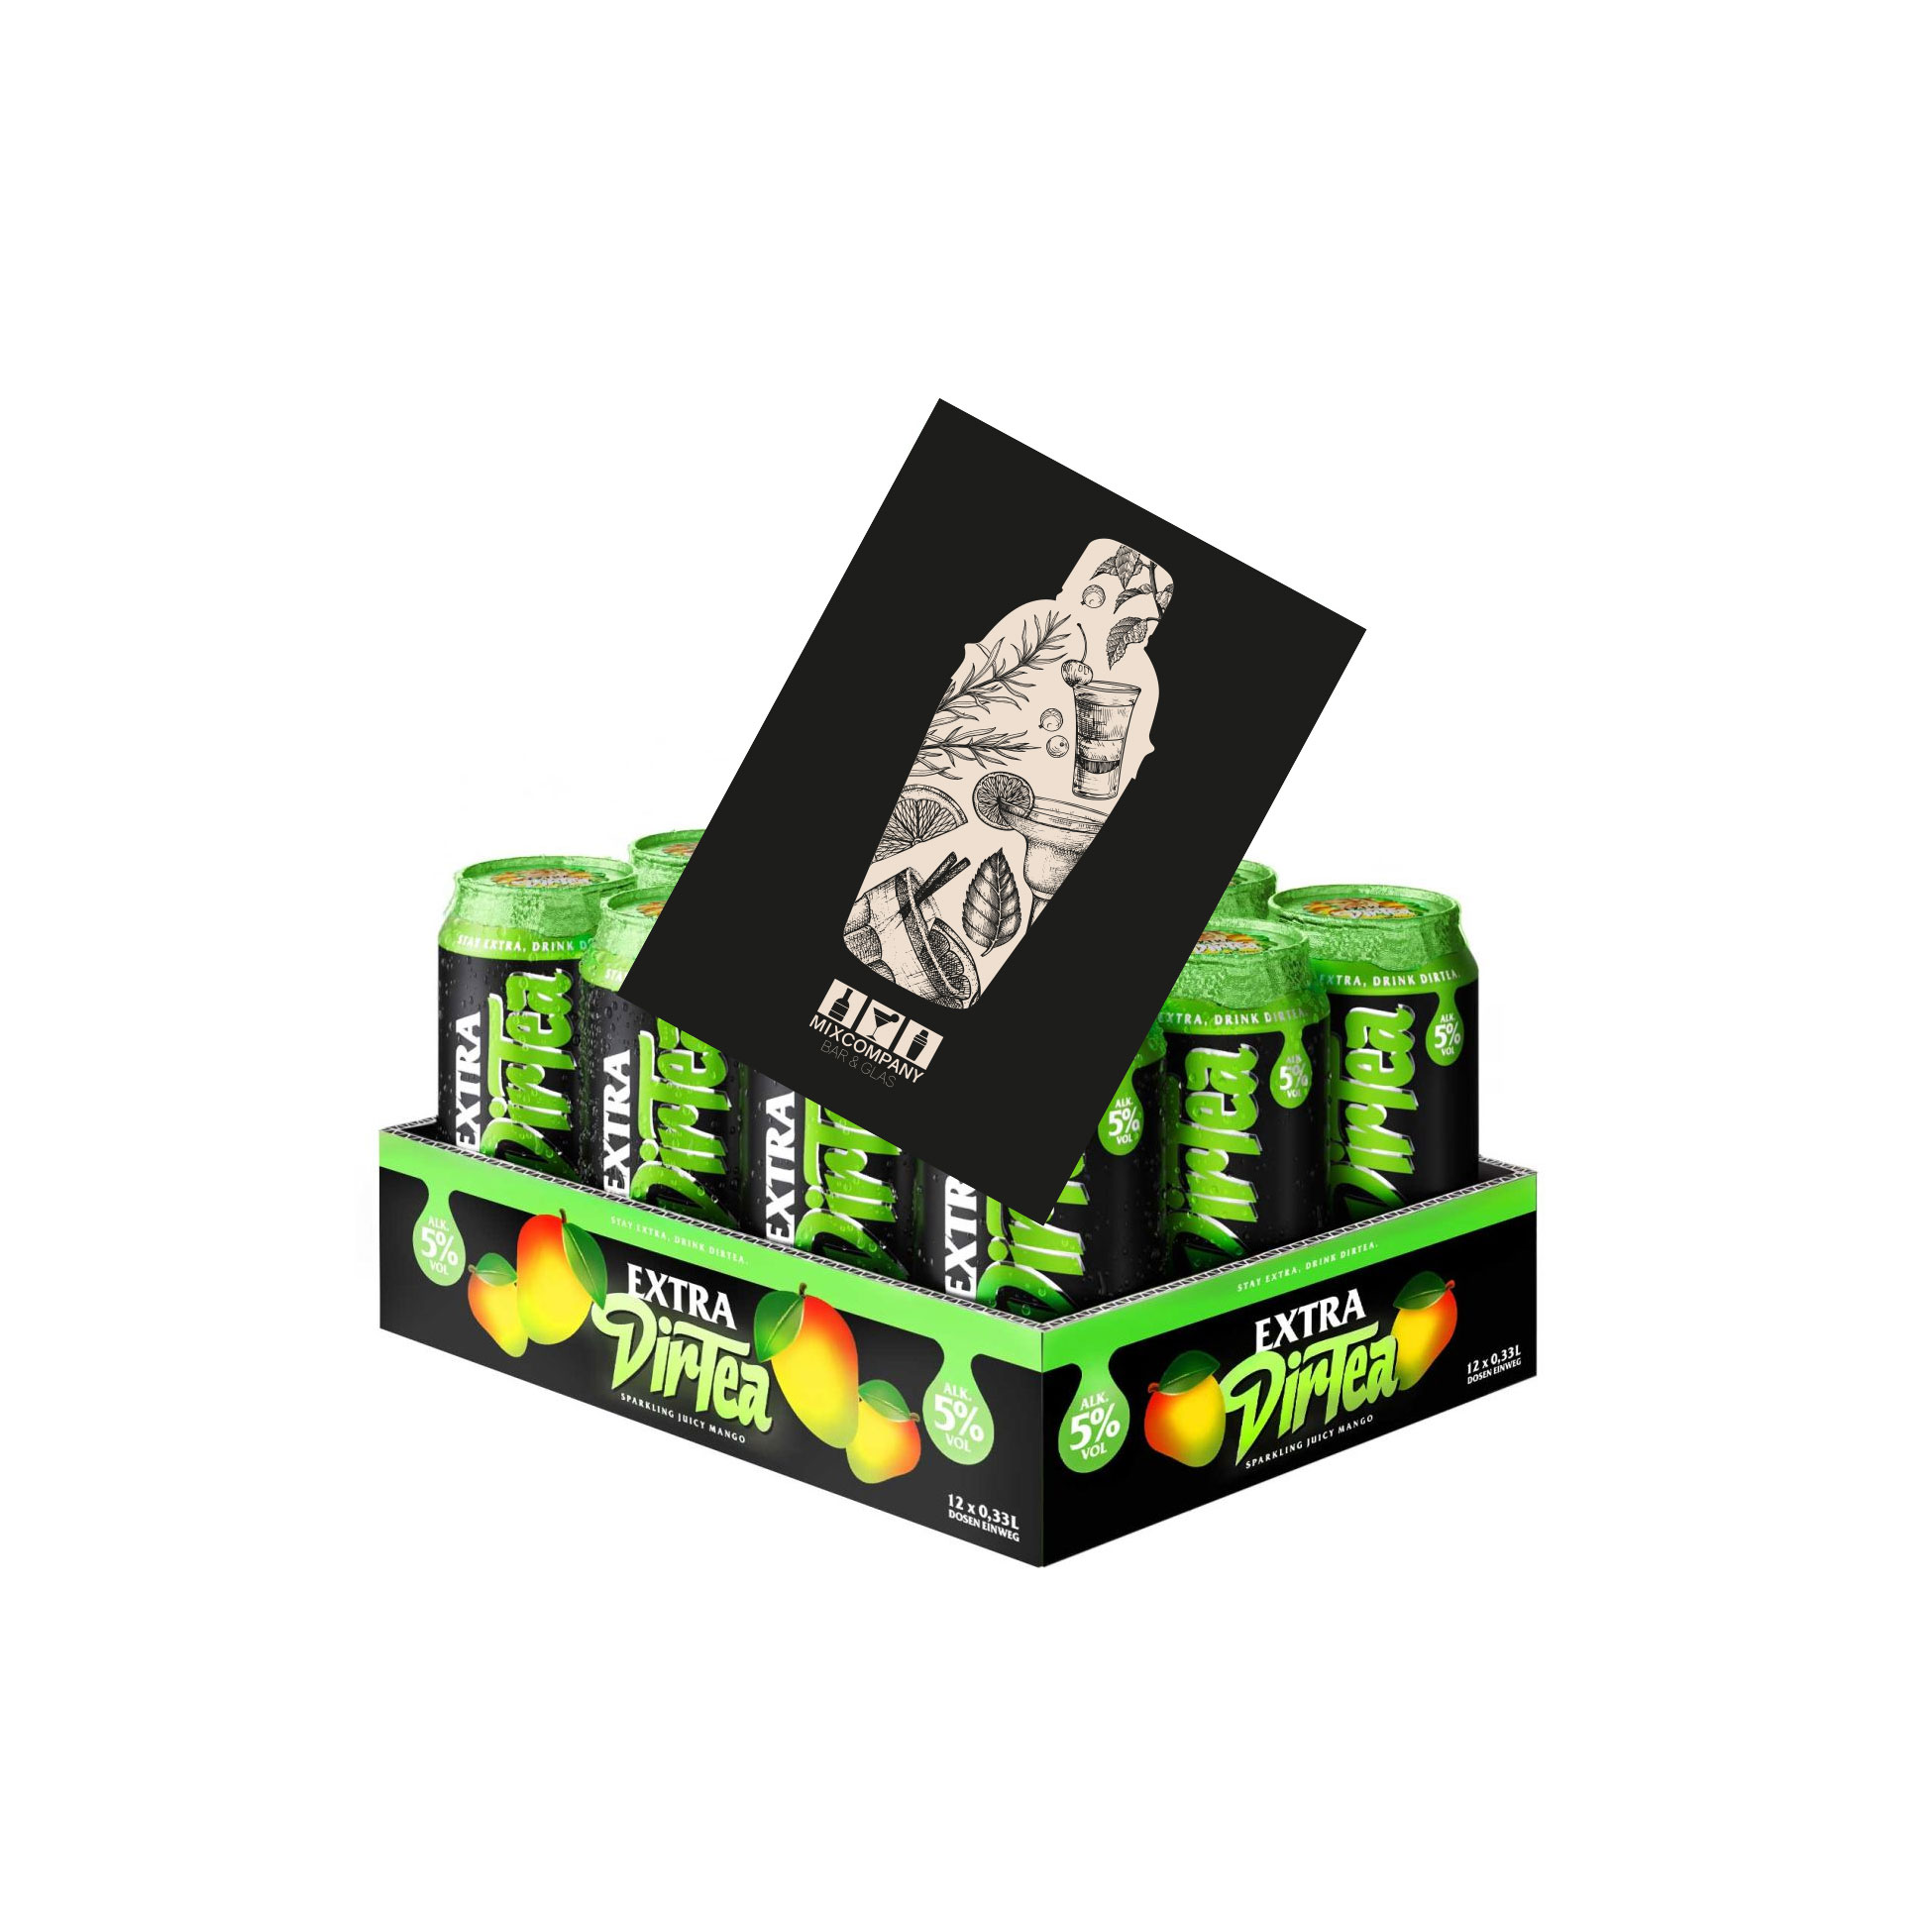 Extra Dirtea 12x Sparkling Juicy Mango 0,33L (5% Vol) Shirin David inkl. Pfand EINWEG- [Enthält Sulfite]